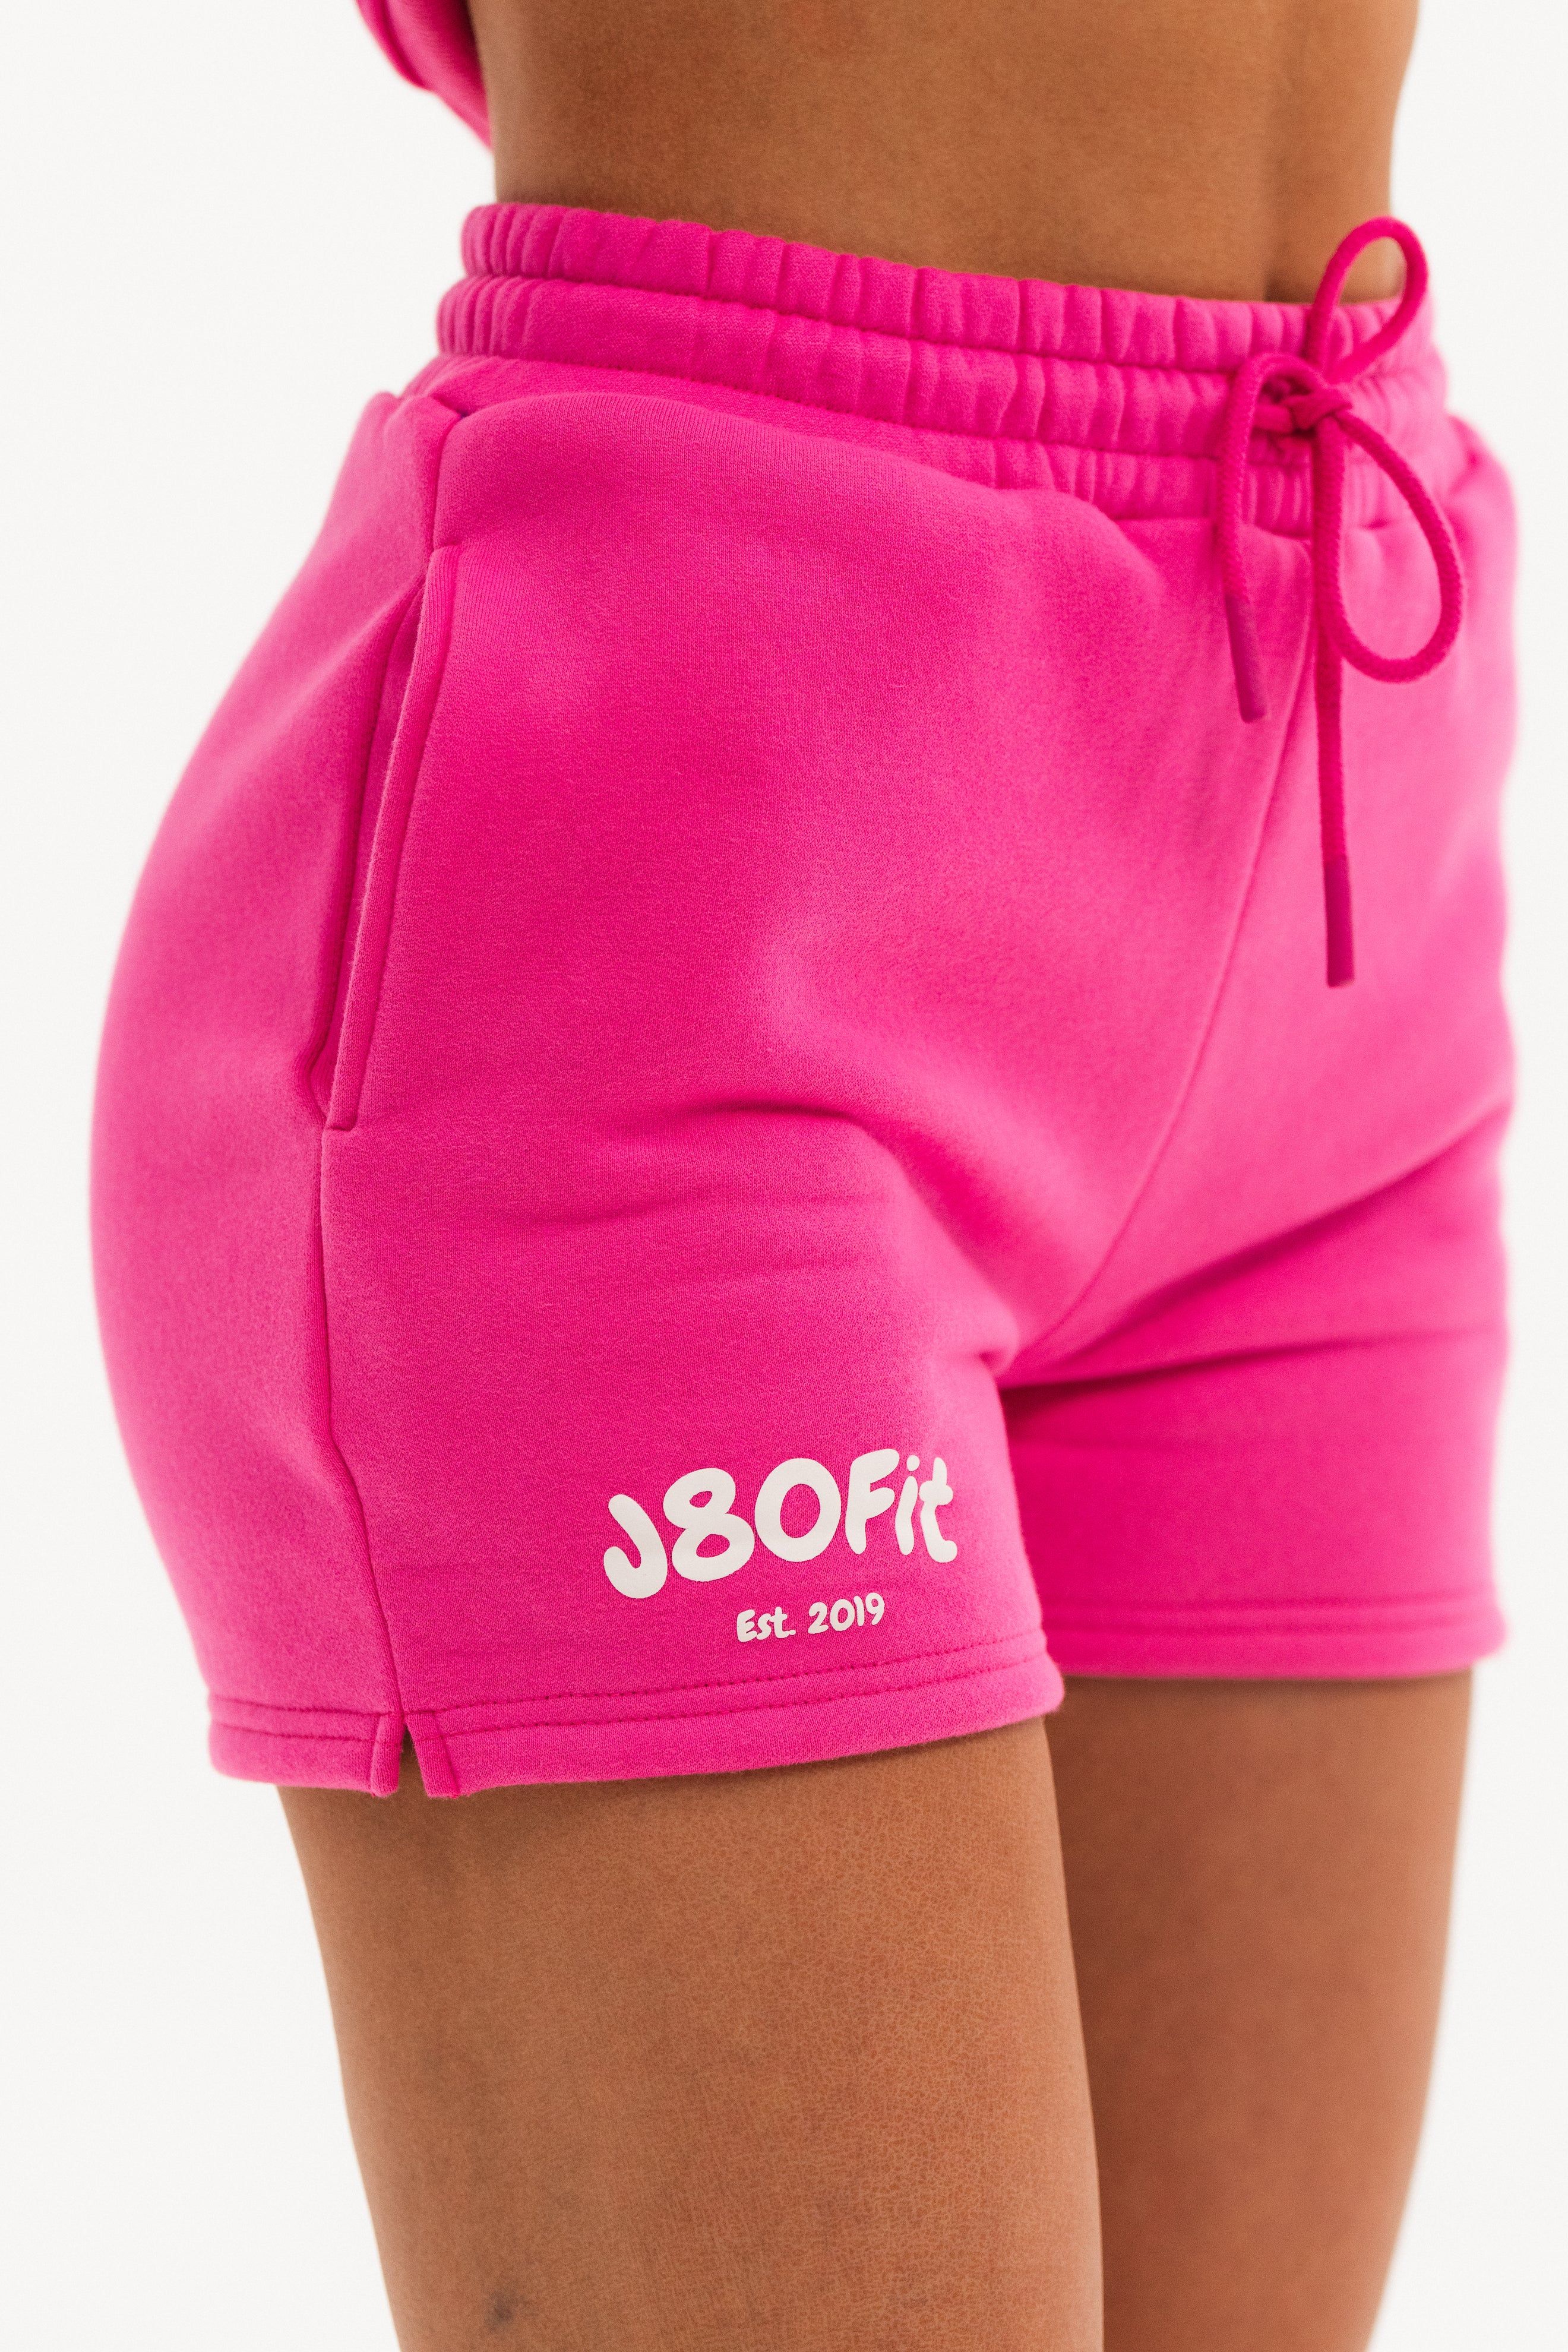 Spring Breeze Shorts | J80FIT